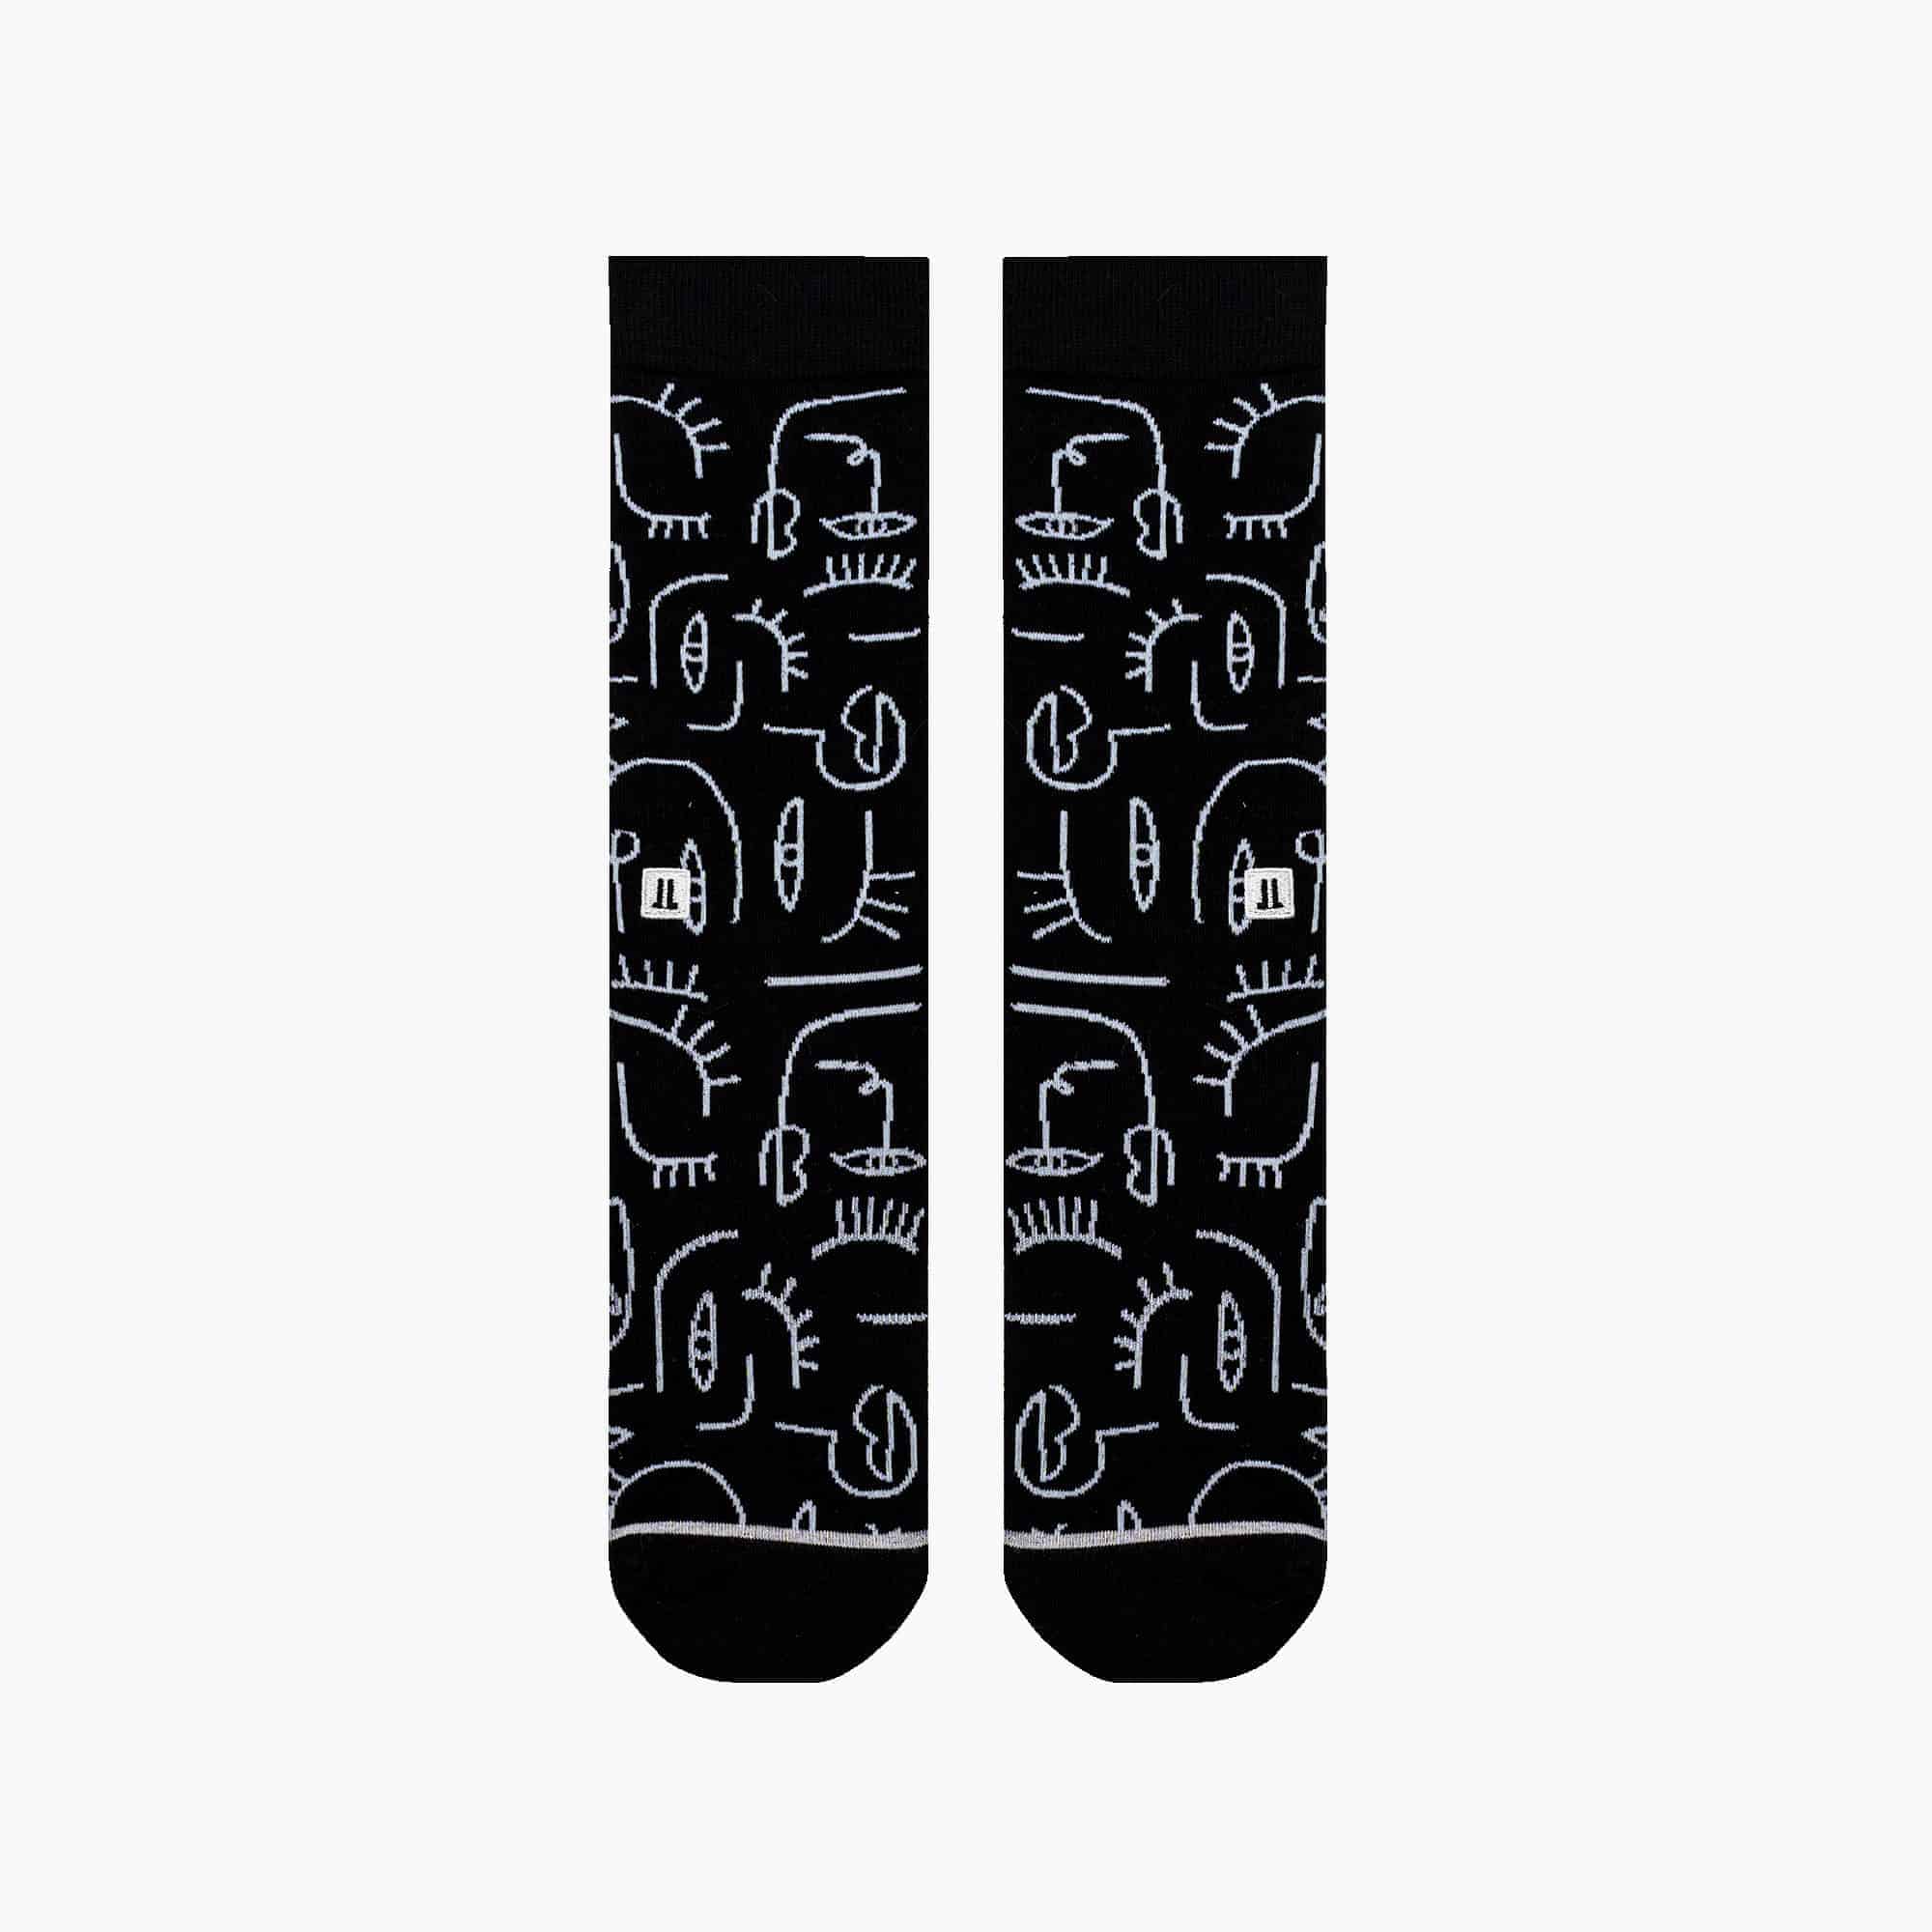 Collectoe Socks | Swagger by Koketit | Socks by Artists